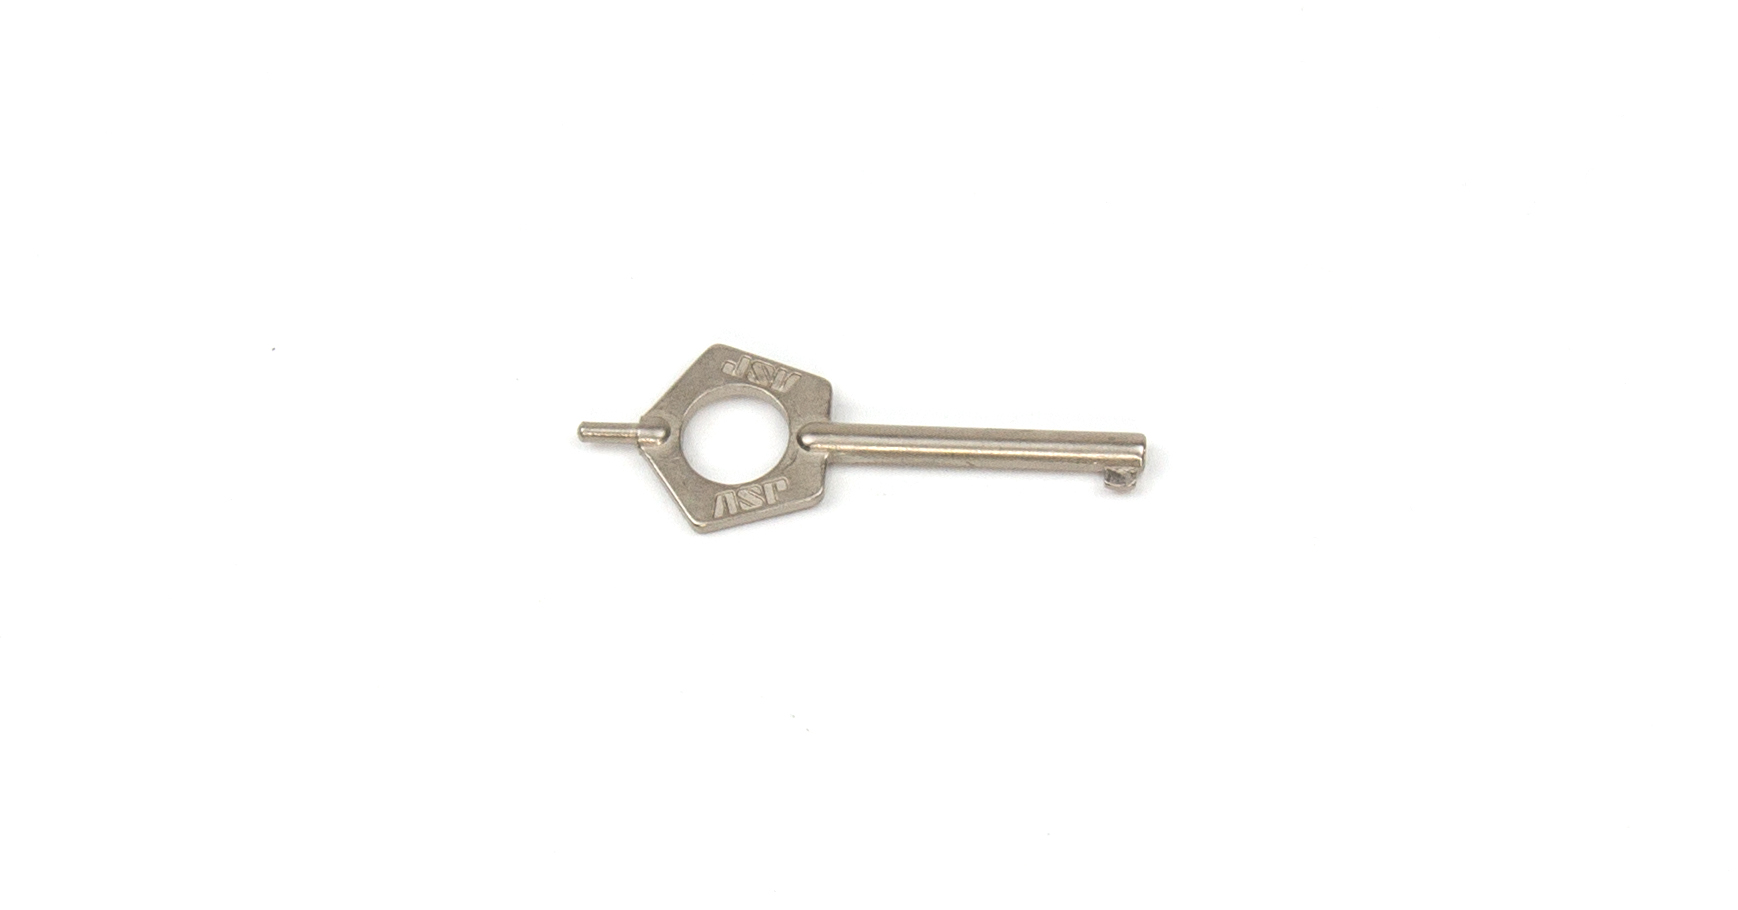 ASP  Pentagon Key  (1 Pawl) / Handschellenschlüssel Standard